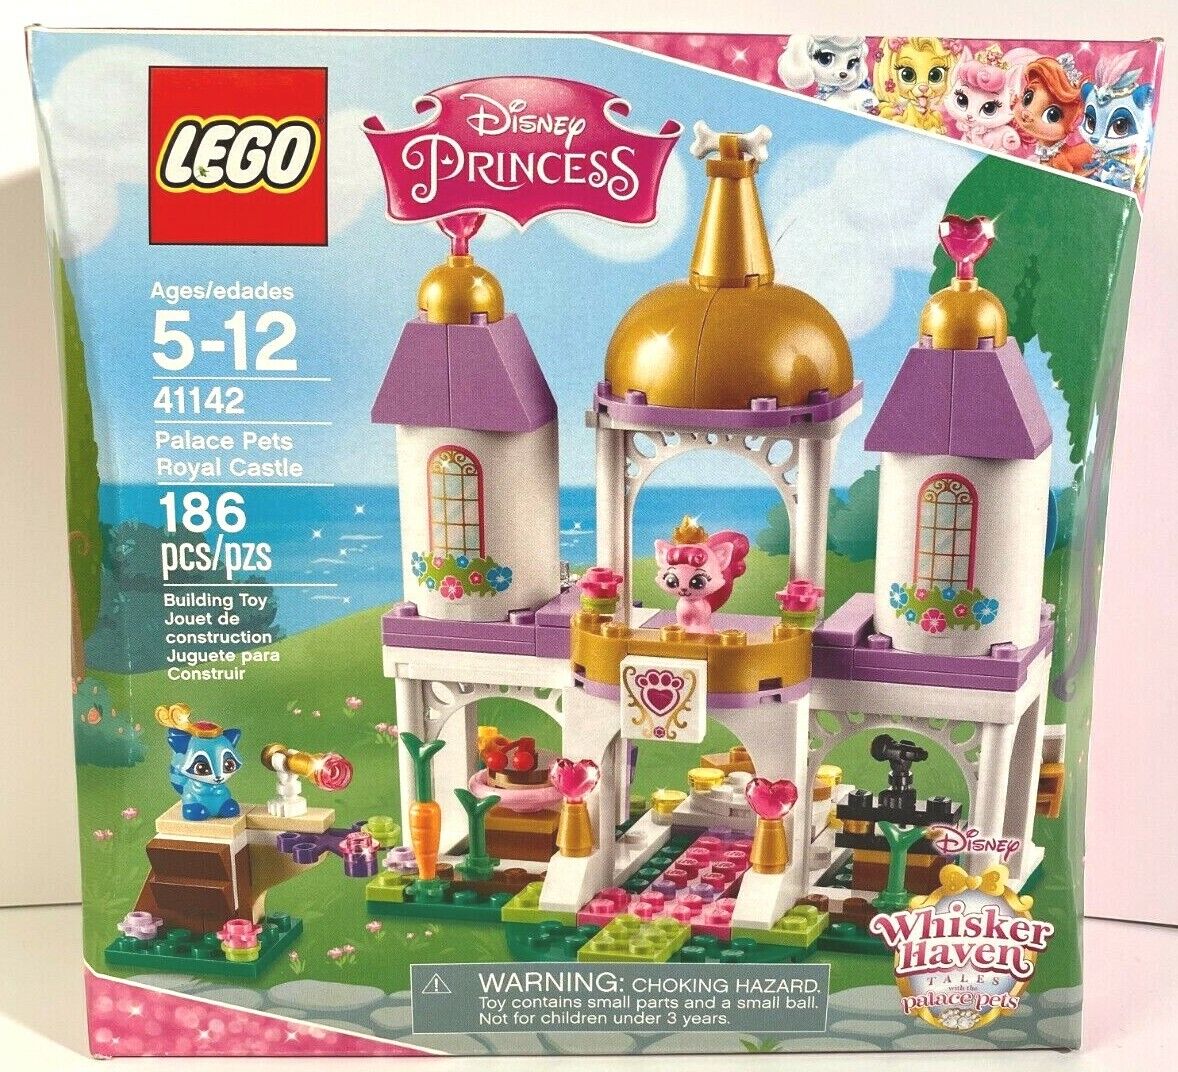 Lego Disney Princess - Palace Pets Royal Castle - 41142 - New in Box